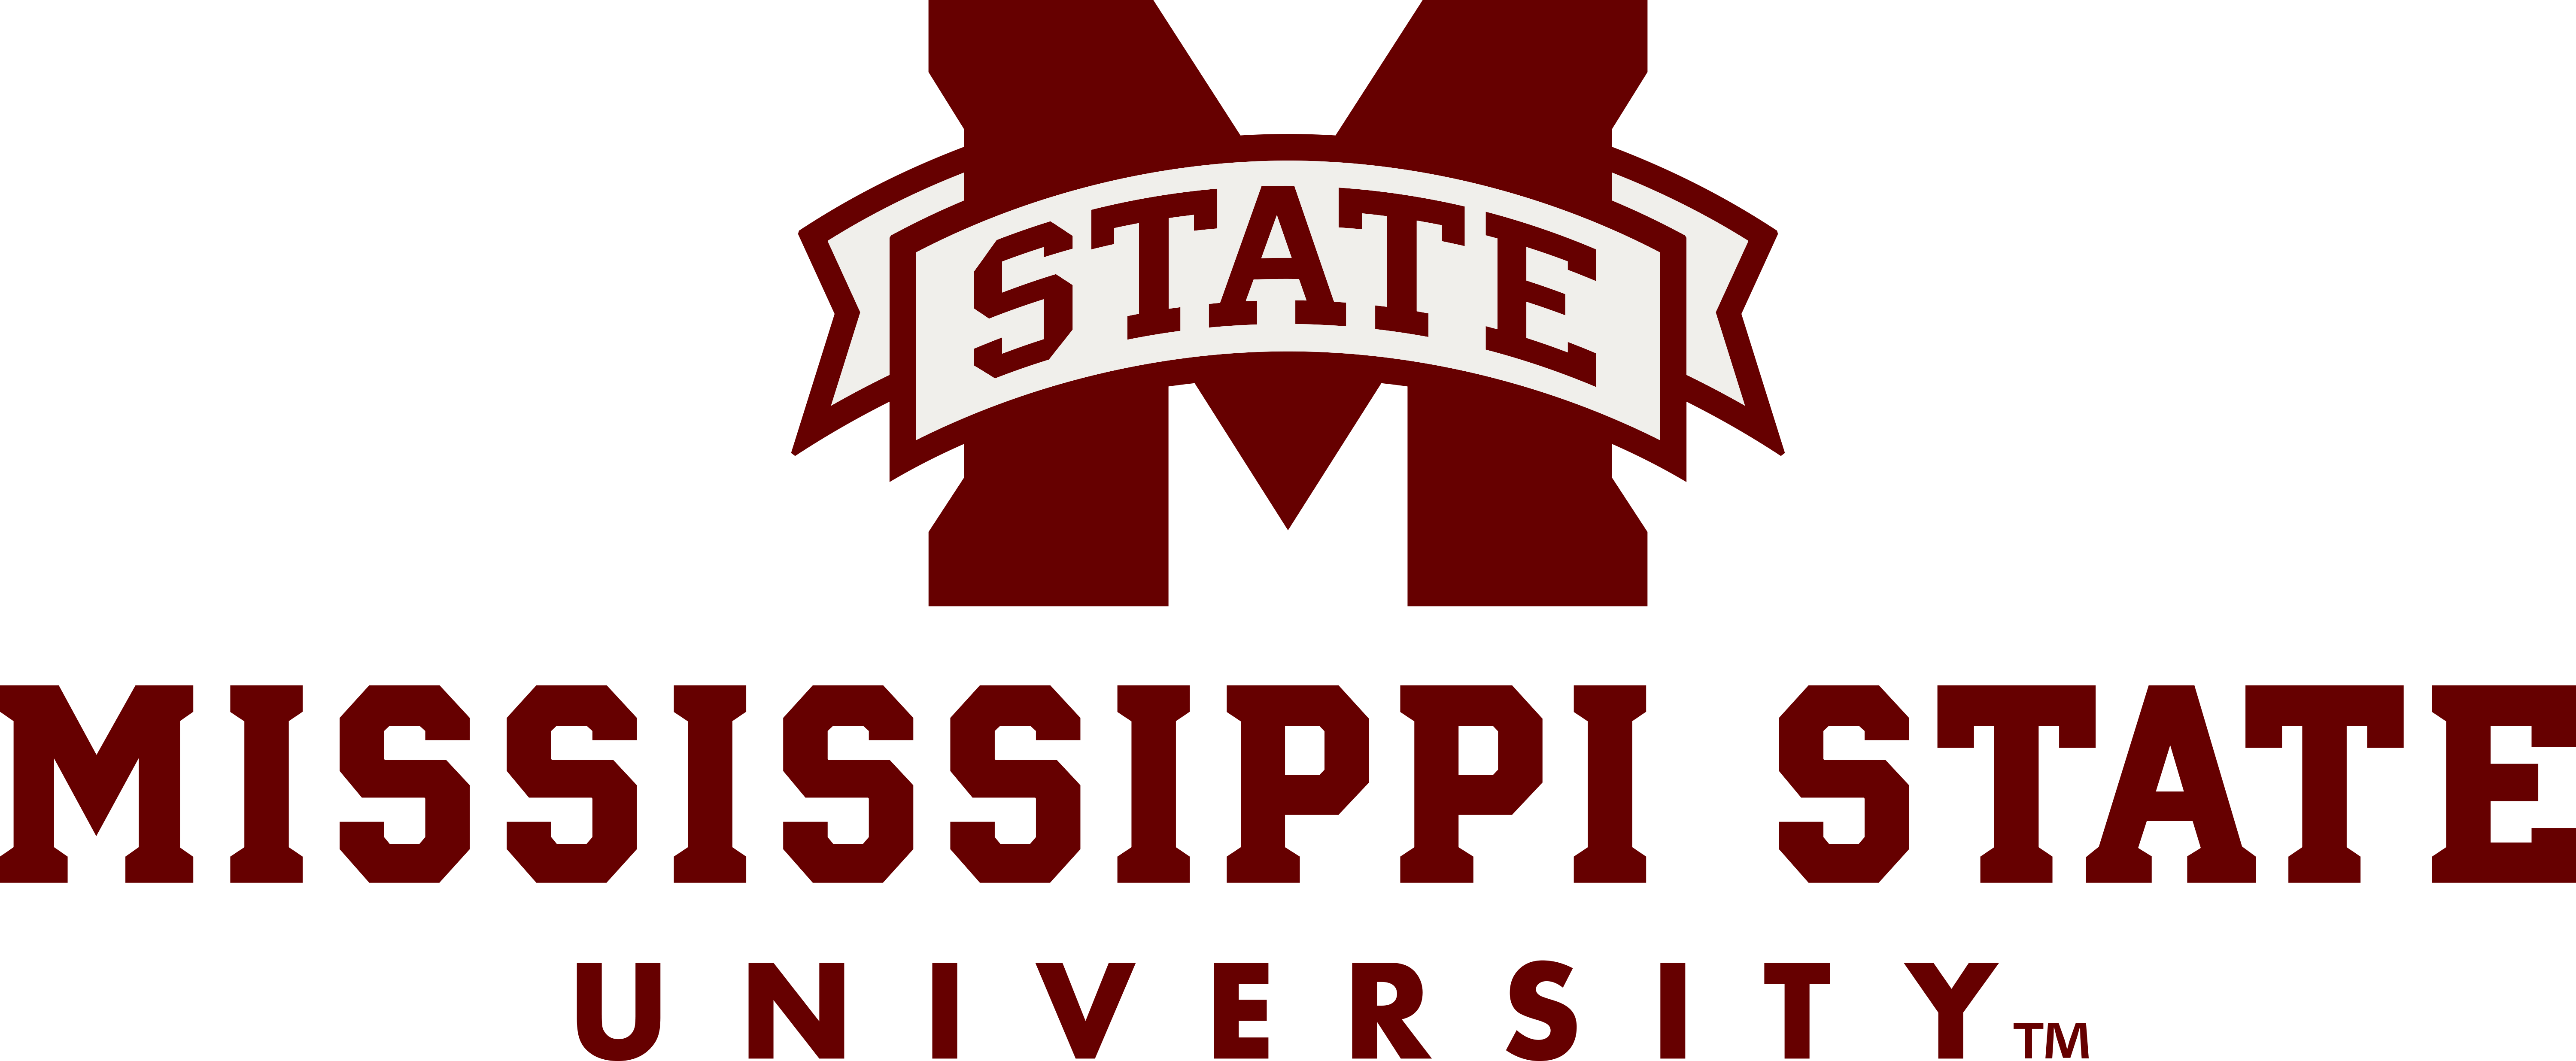 Mississippi Logo - Office of Public Affairs. Mississippi State University